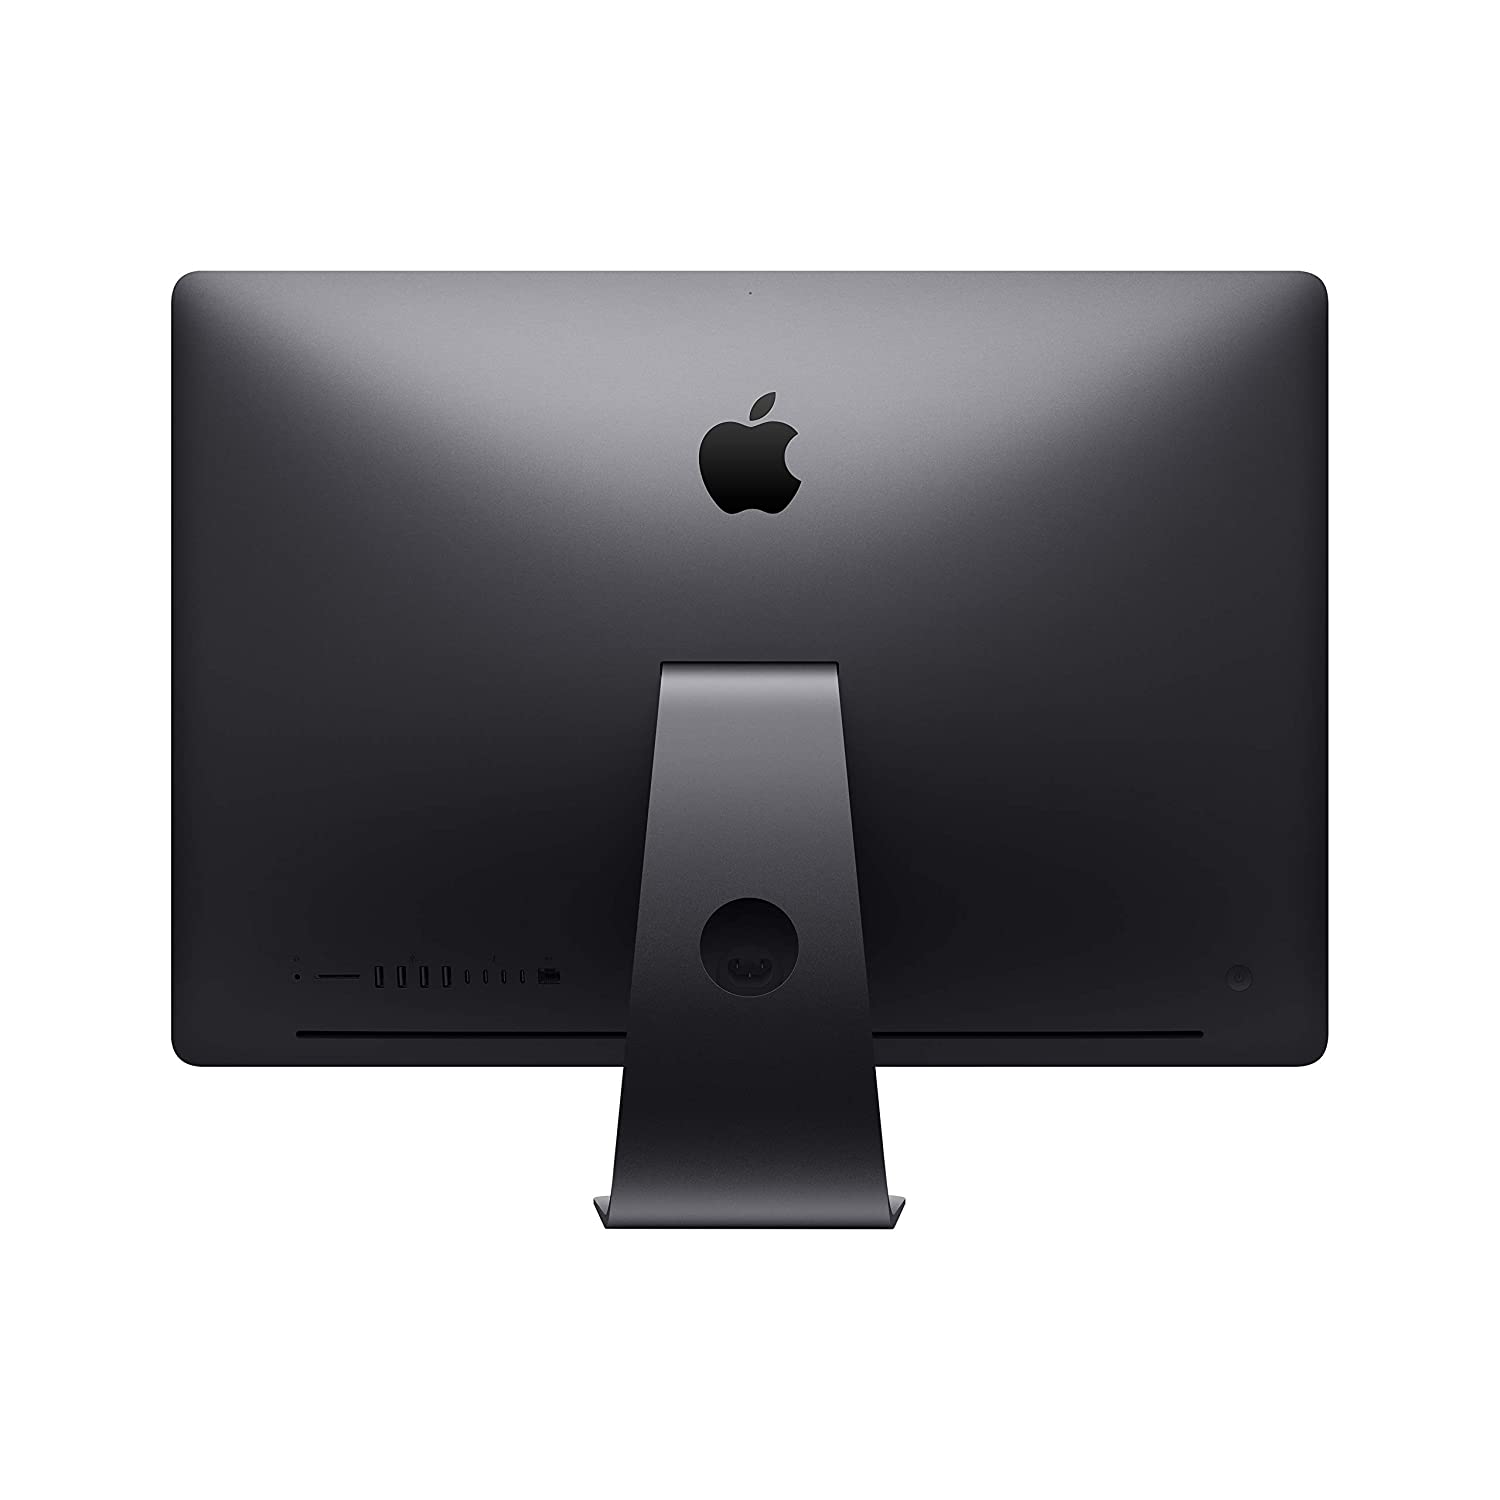 New Apple iMac Pro (27-inch, 3.0GHz 10-core Intel Xeon W Processor, 32GB RAM, 1TB SSD Storage)